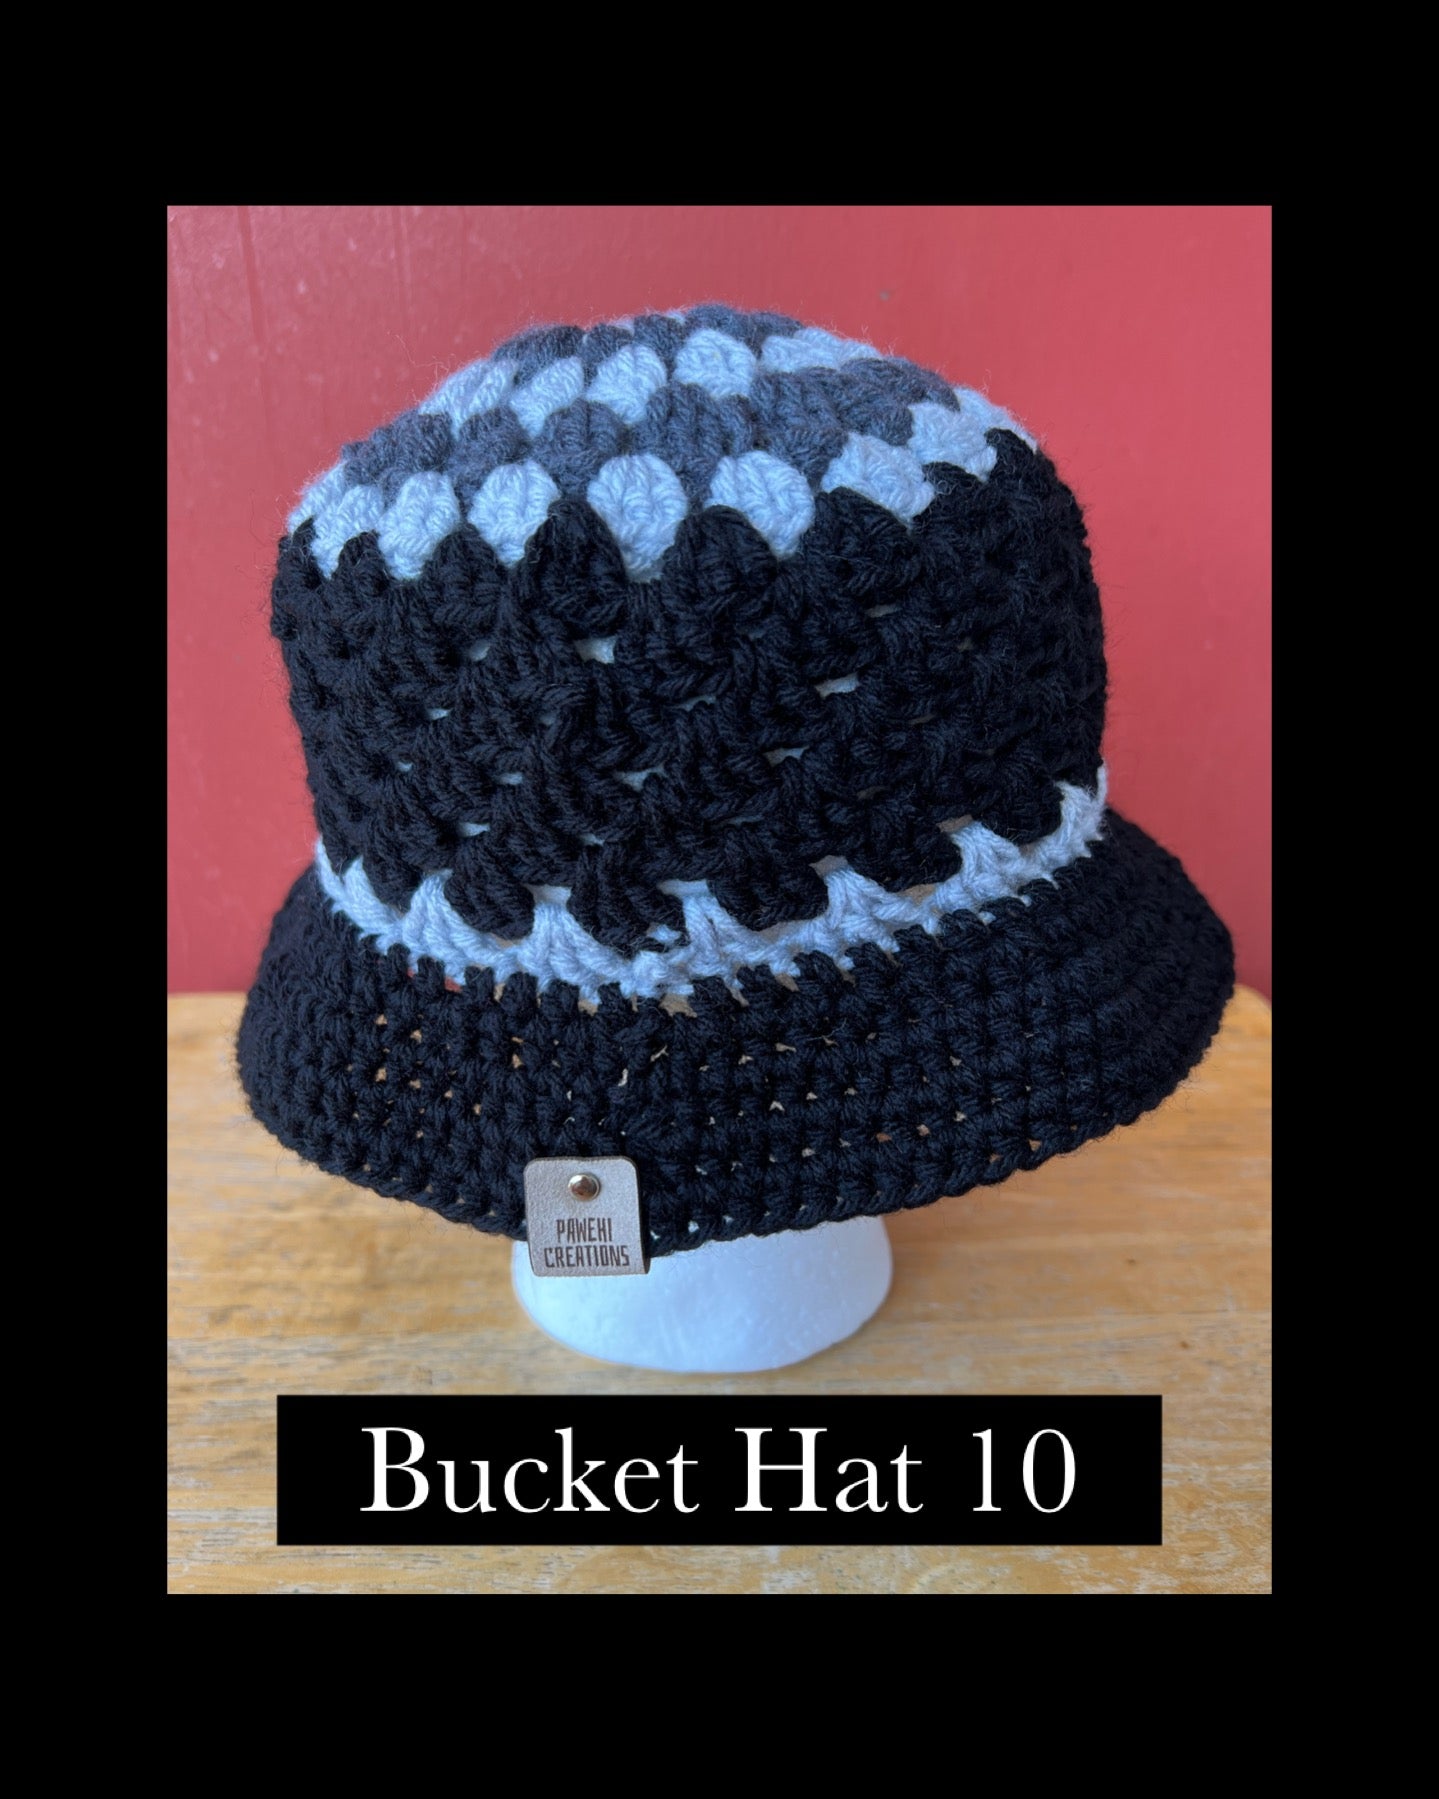 Pop-Up Mākeke - Pawehi Creations - Crochet Bucket  Hat - Style #10